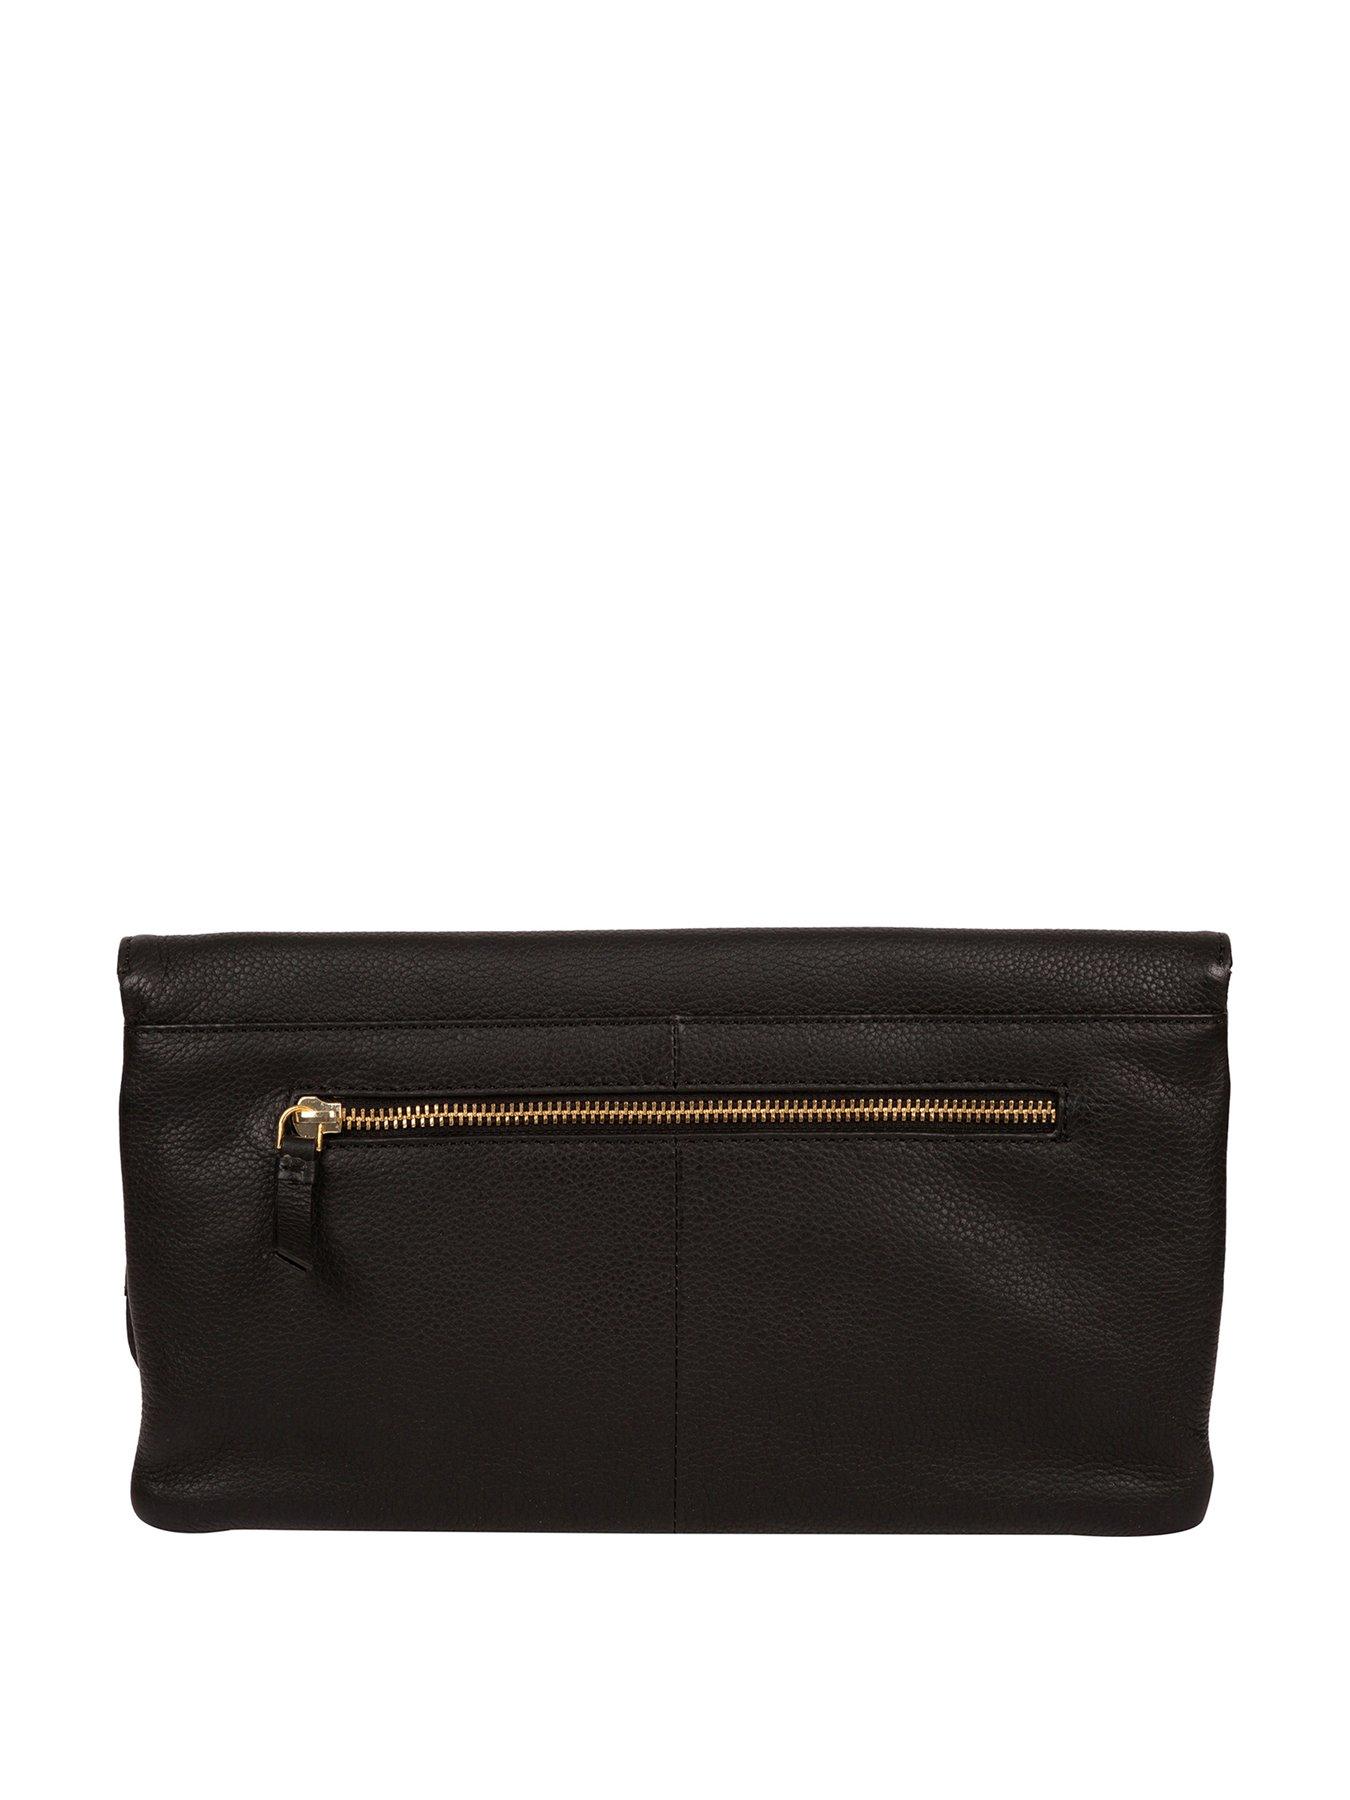 Bags & Purses Golders Leather Flap Over Clutch Bag - Black